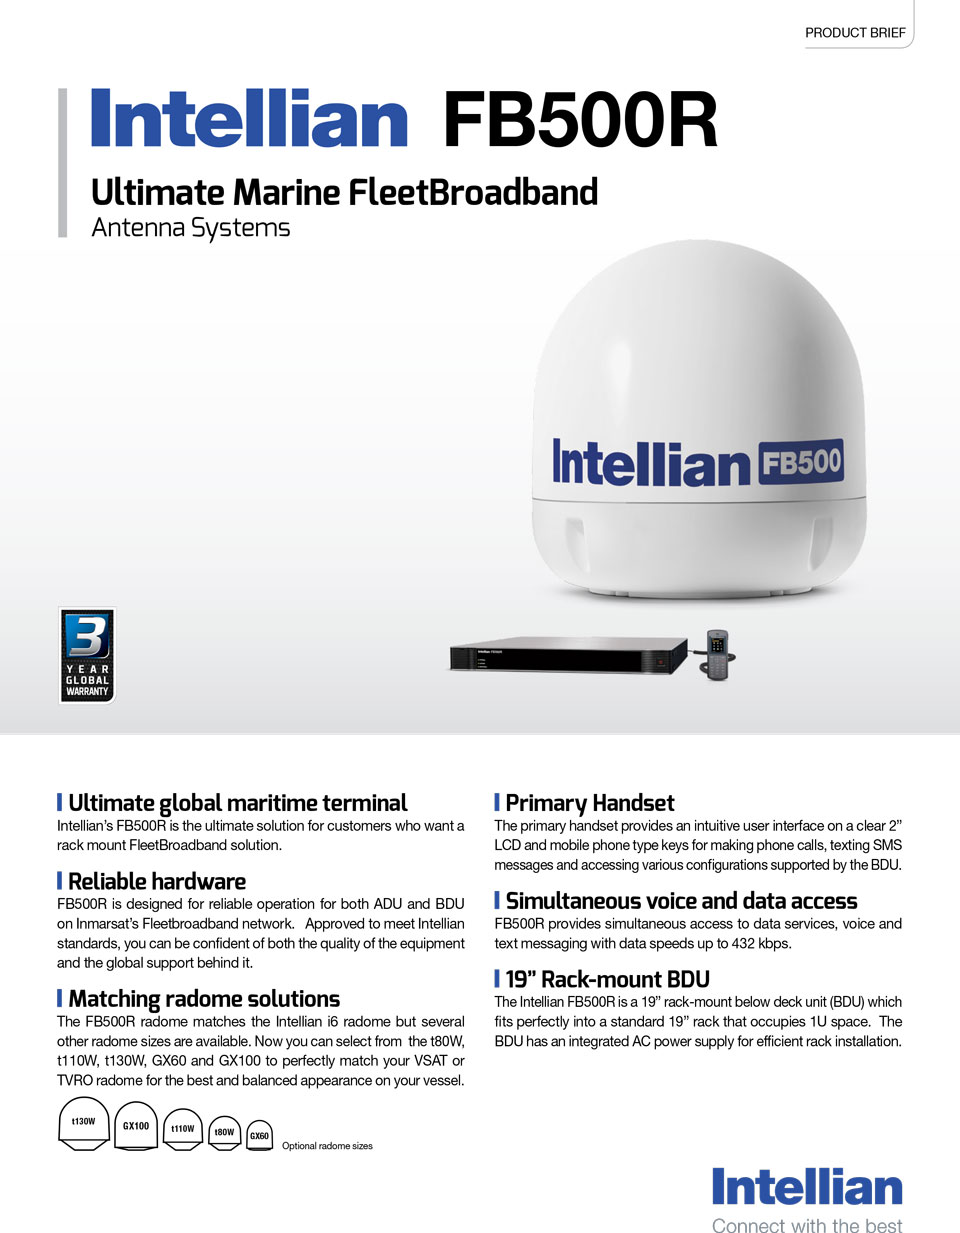 Intellian Fleetbroadband FB500R